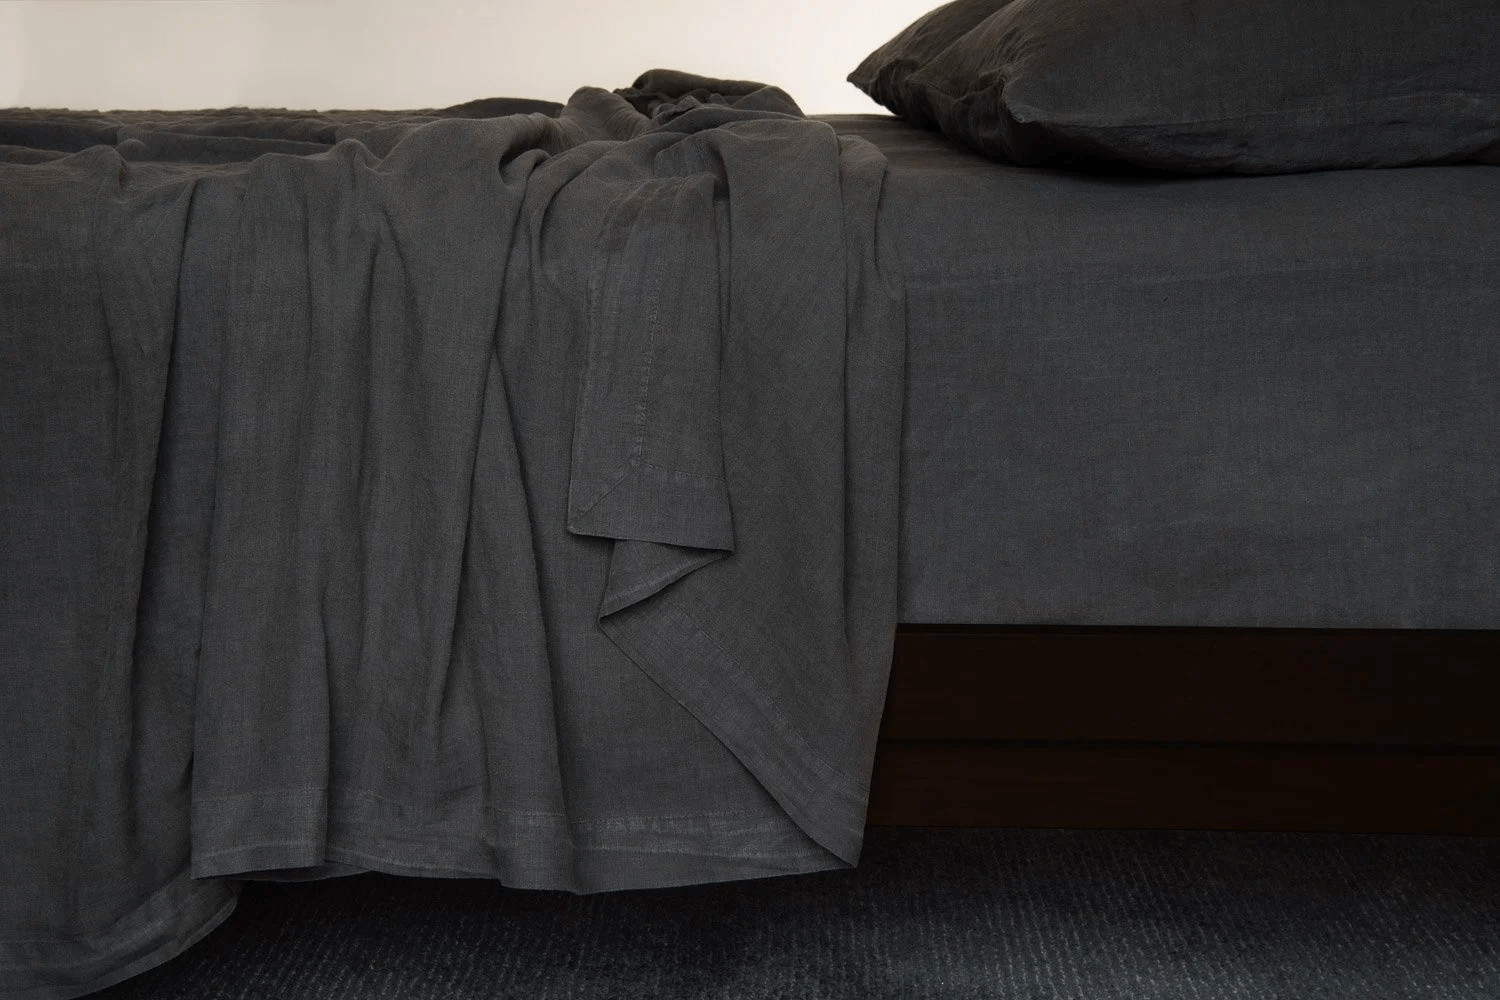 Belgian linen sheets in Charcoal